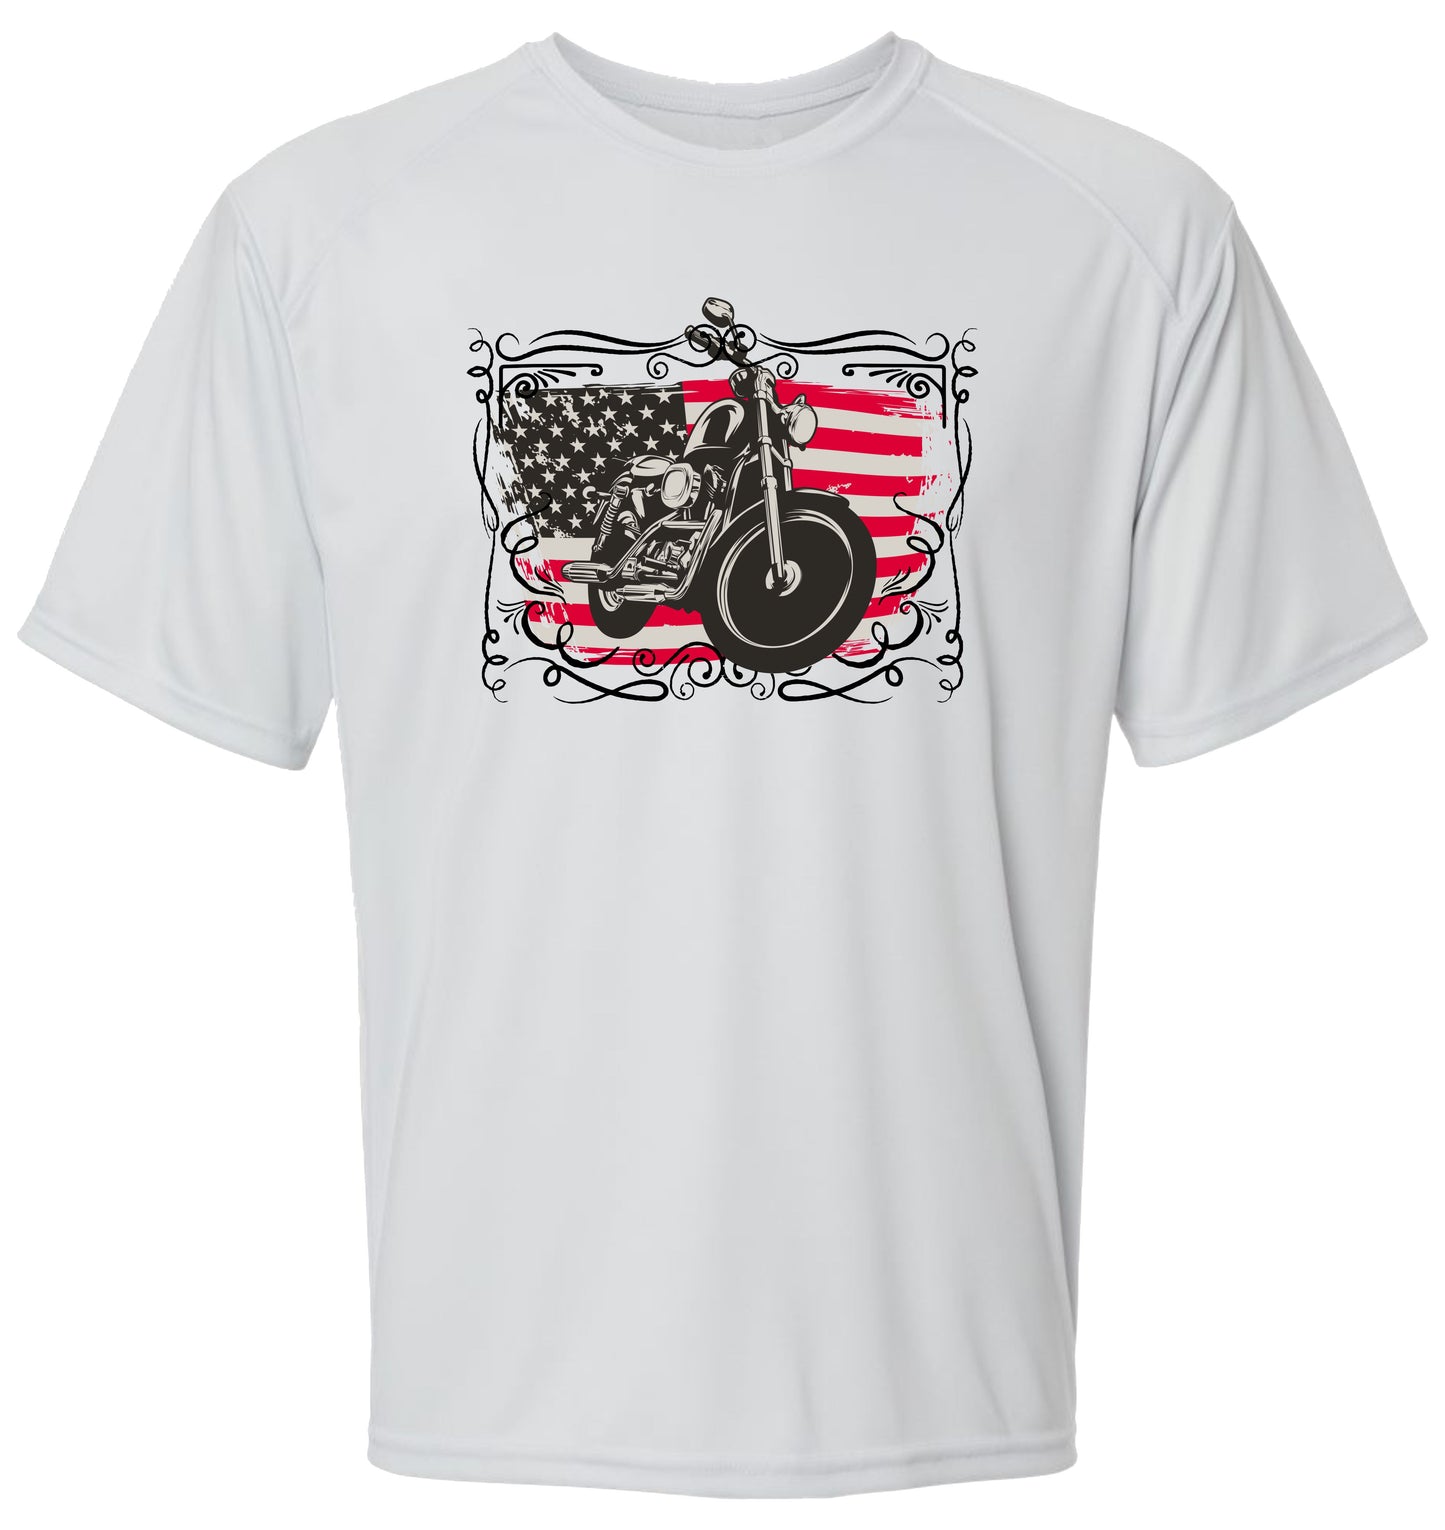 102 SM Flag and Motorcycle Short Sleeve UPF 50+ Shirt Lake Shirt Outdoor Shirt Biker Shirt Casual Shirt Fishing Shirt Beach Shirt